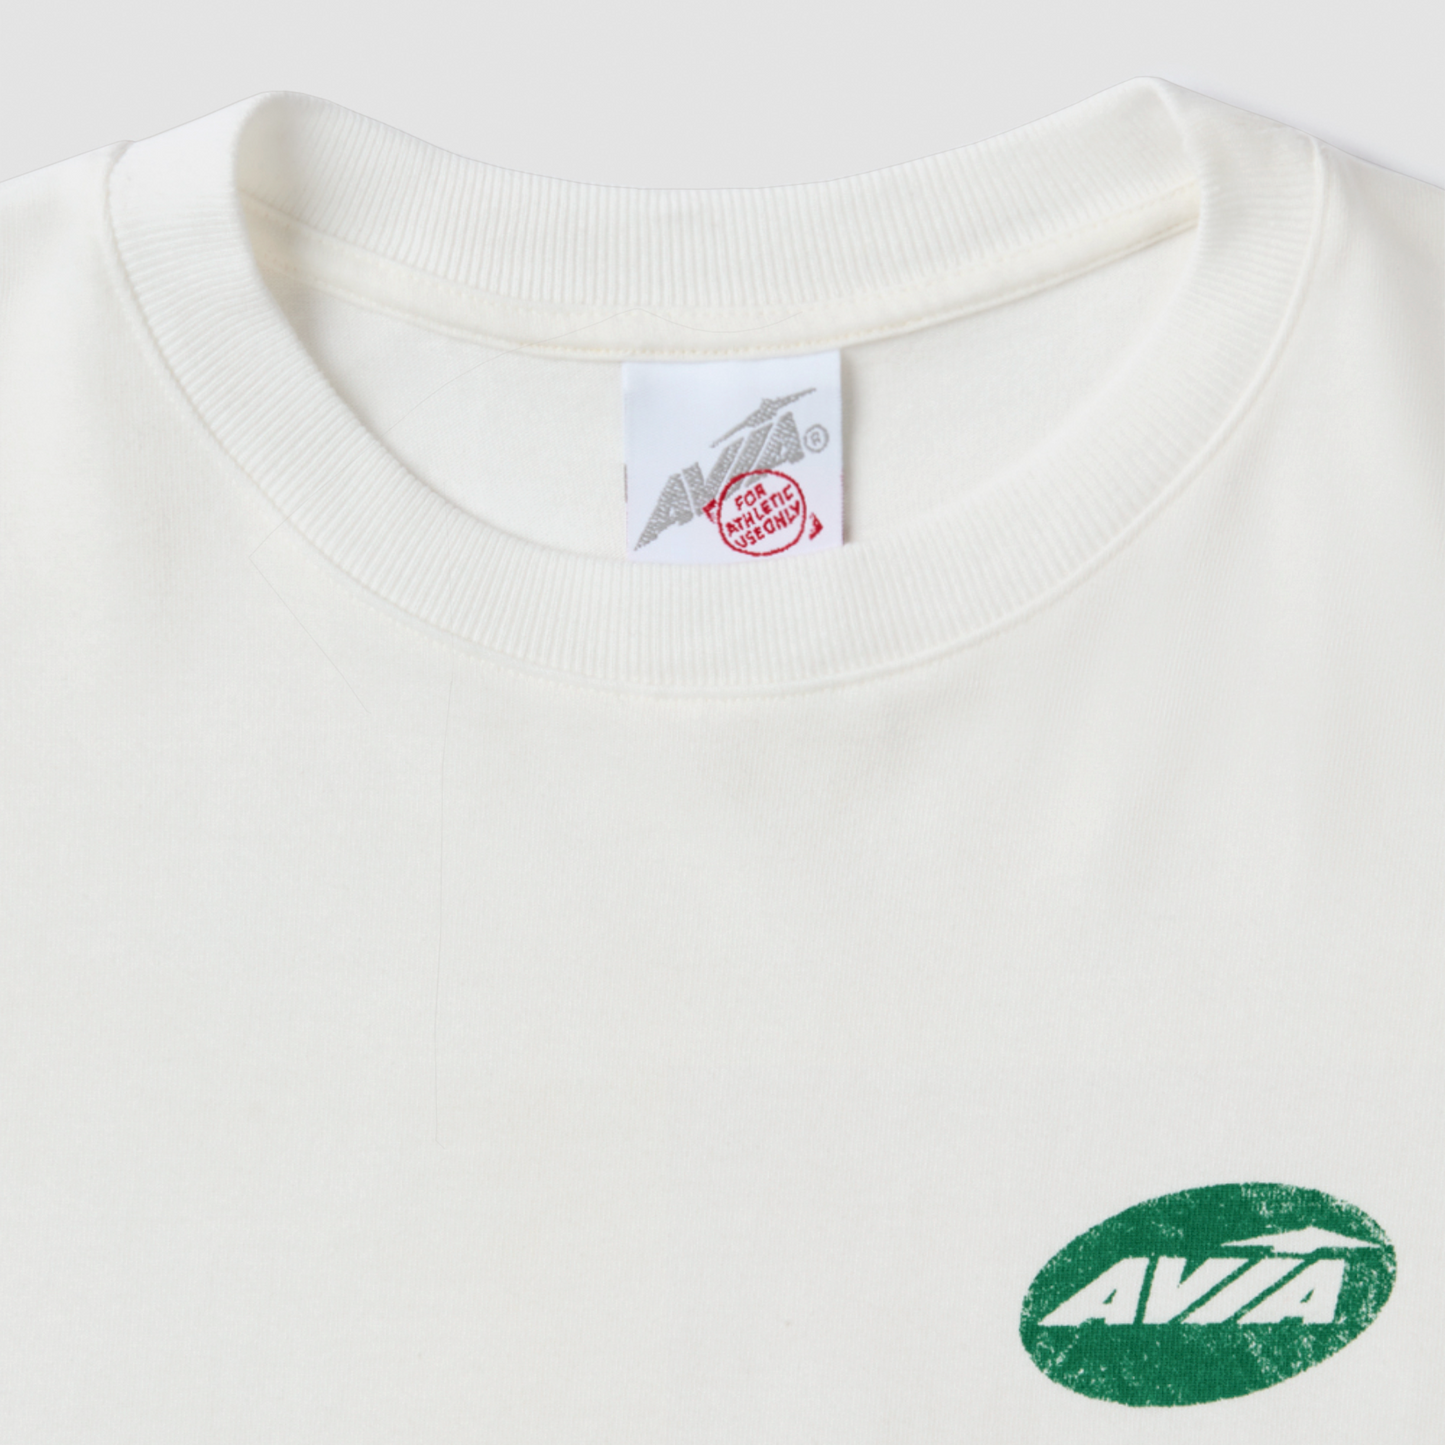 Avia Round Logo T-Shirt - Green